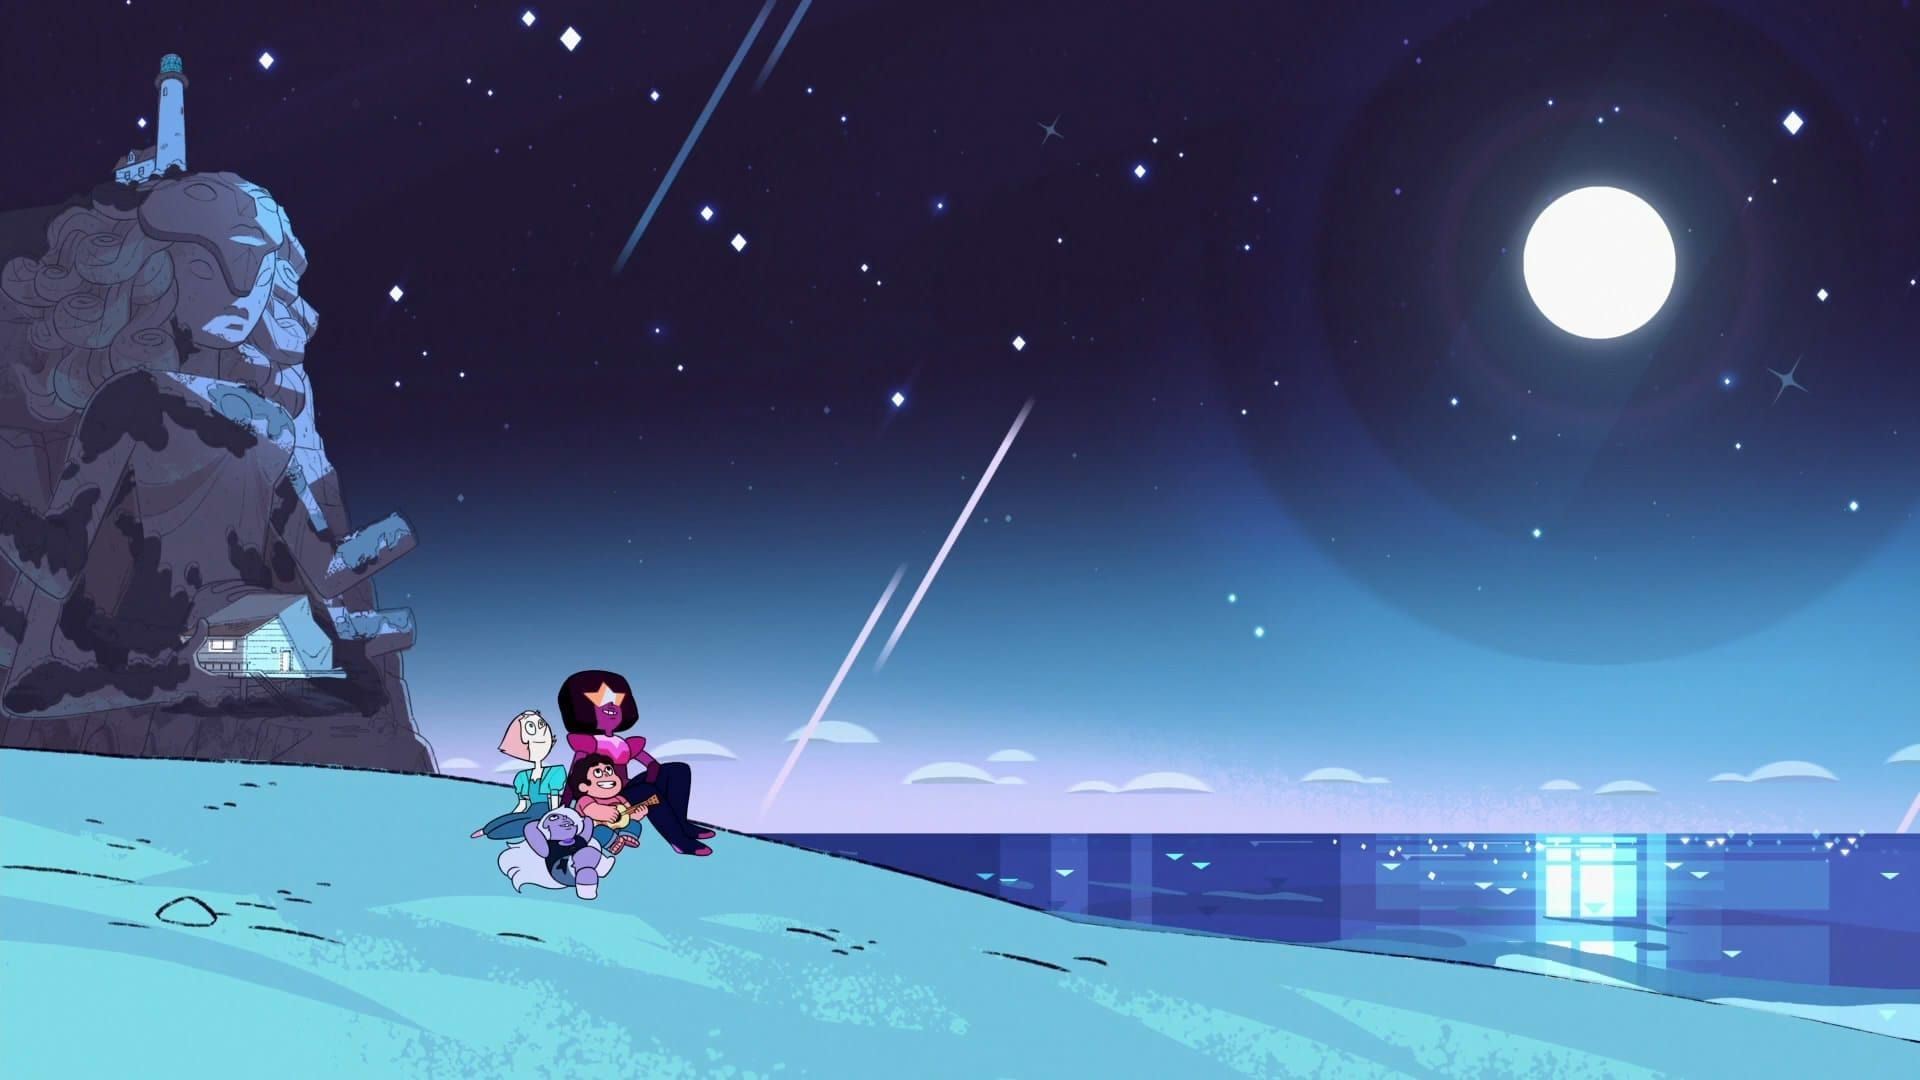 Watch Steven Universe · Season 2 Full Episodes Free Online - Plex